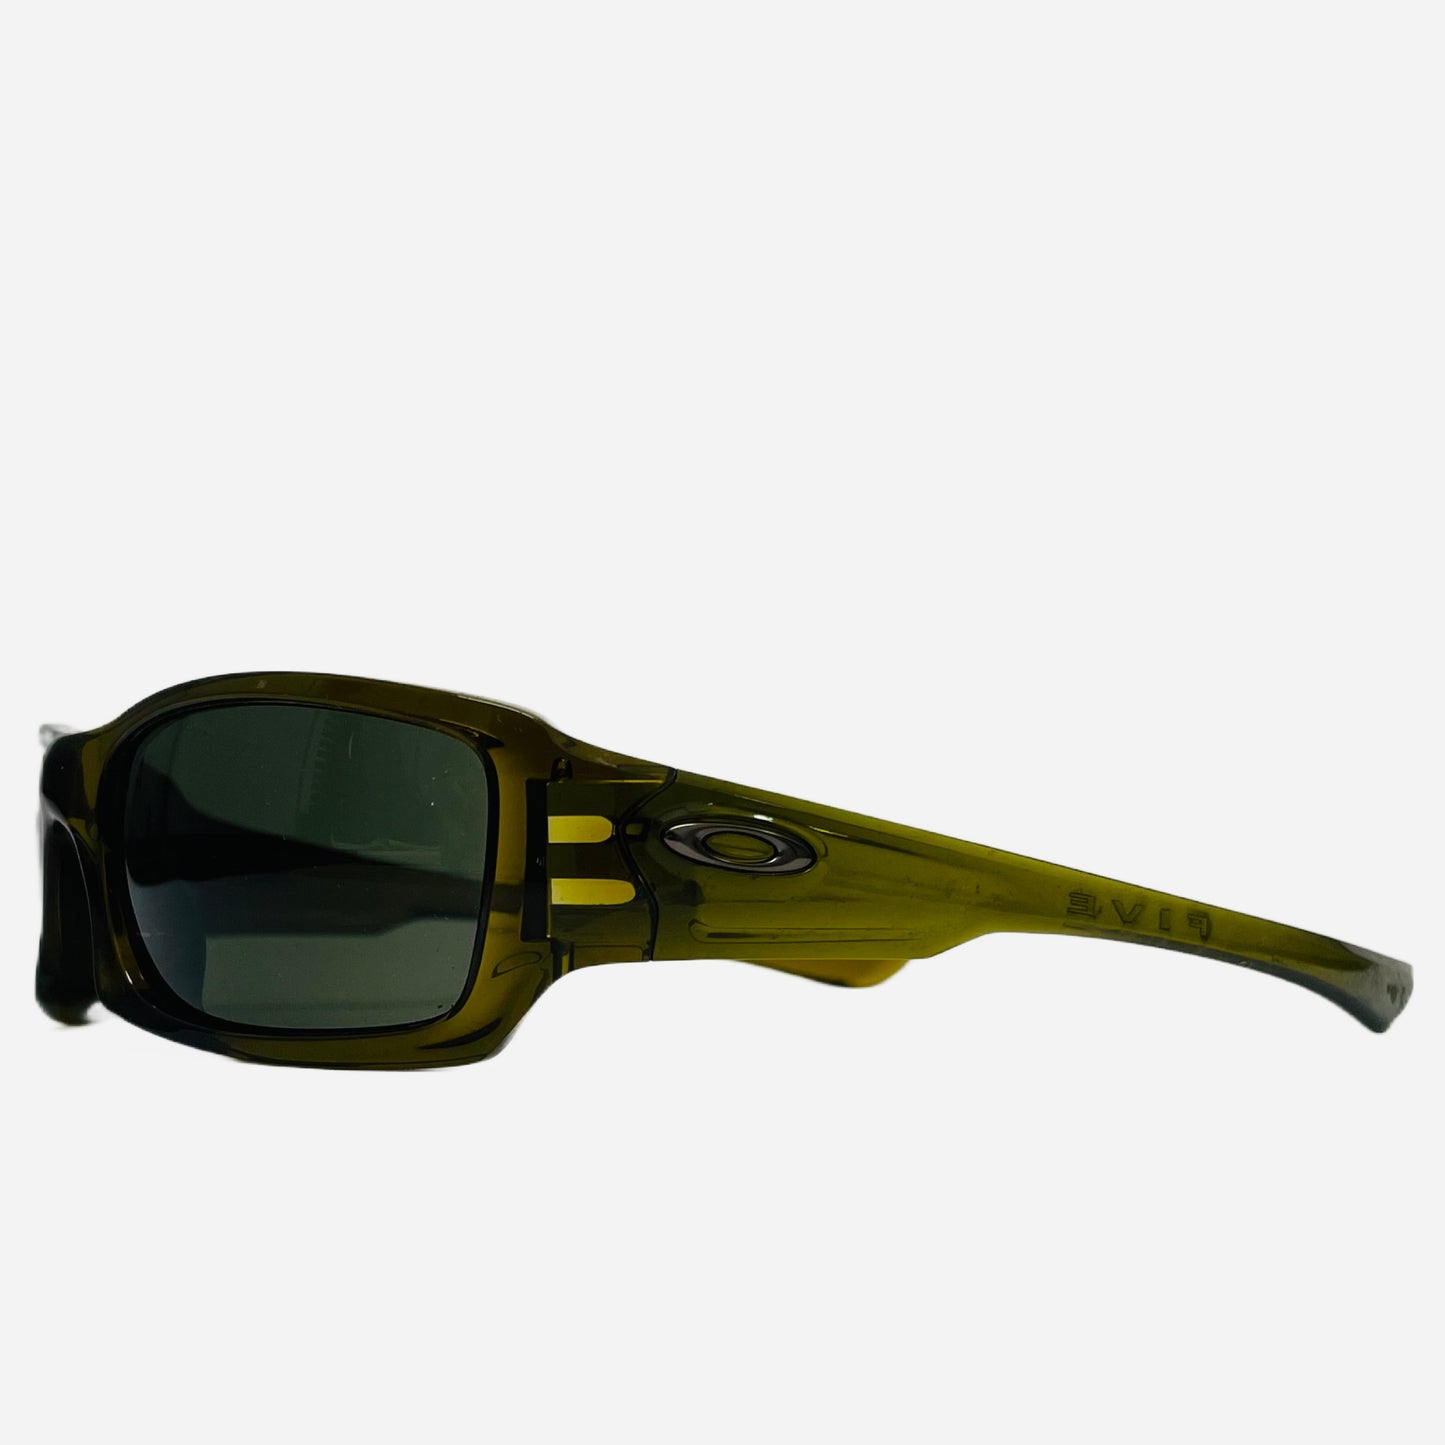 Vintage-Oakley-Five-Sunglasses-Sonnenbrille-the-seekers-side